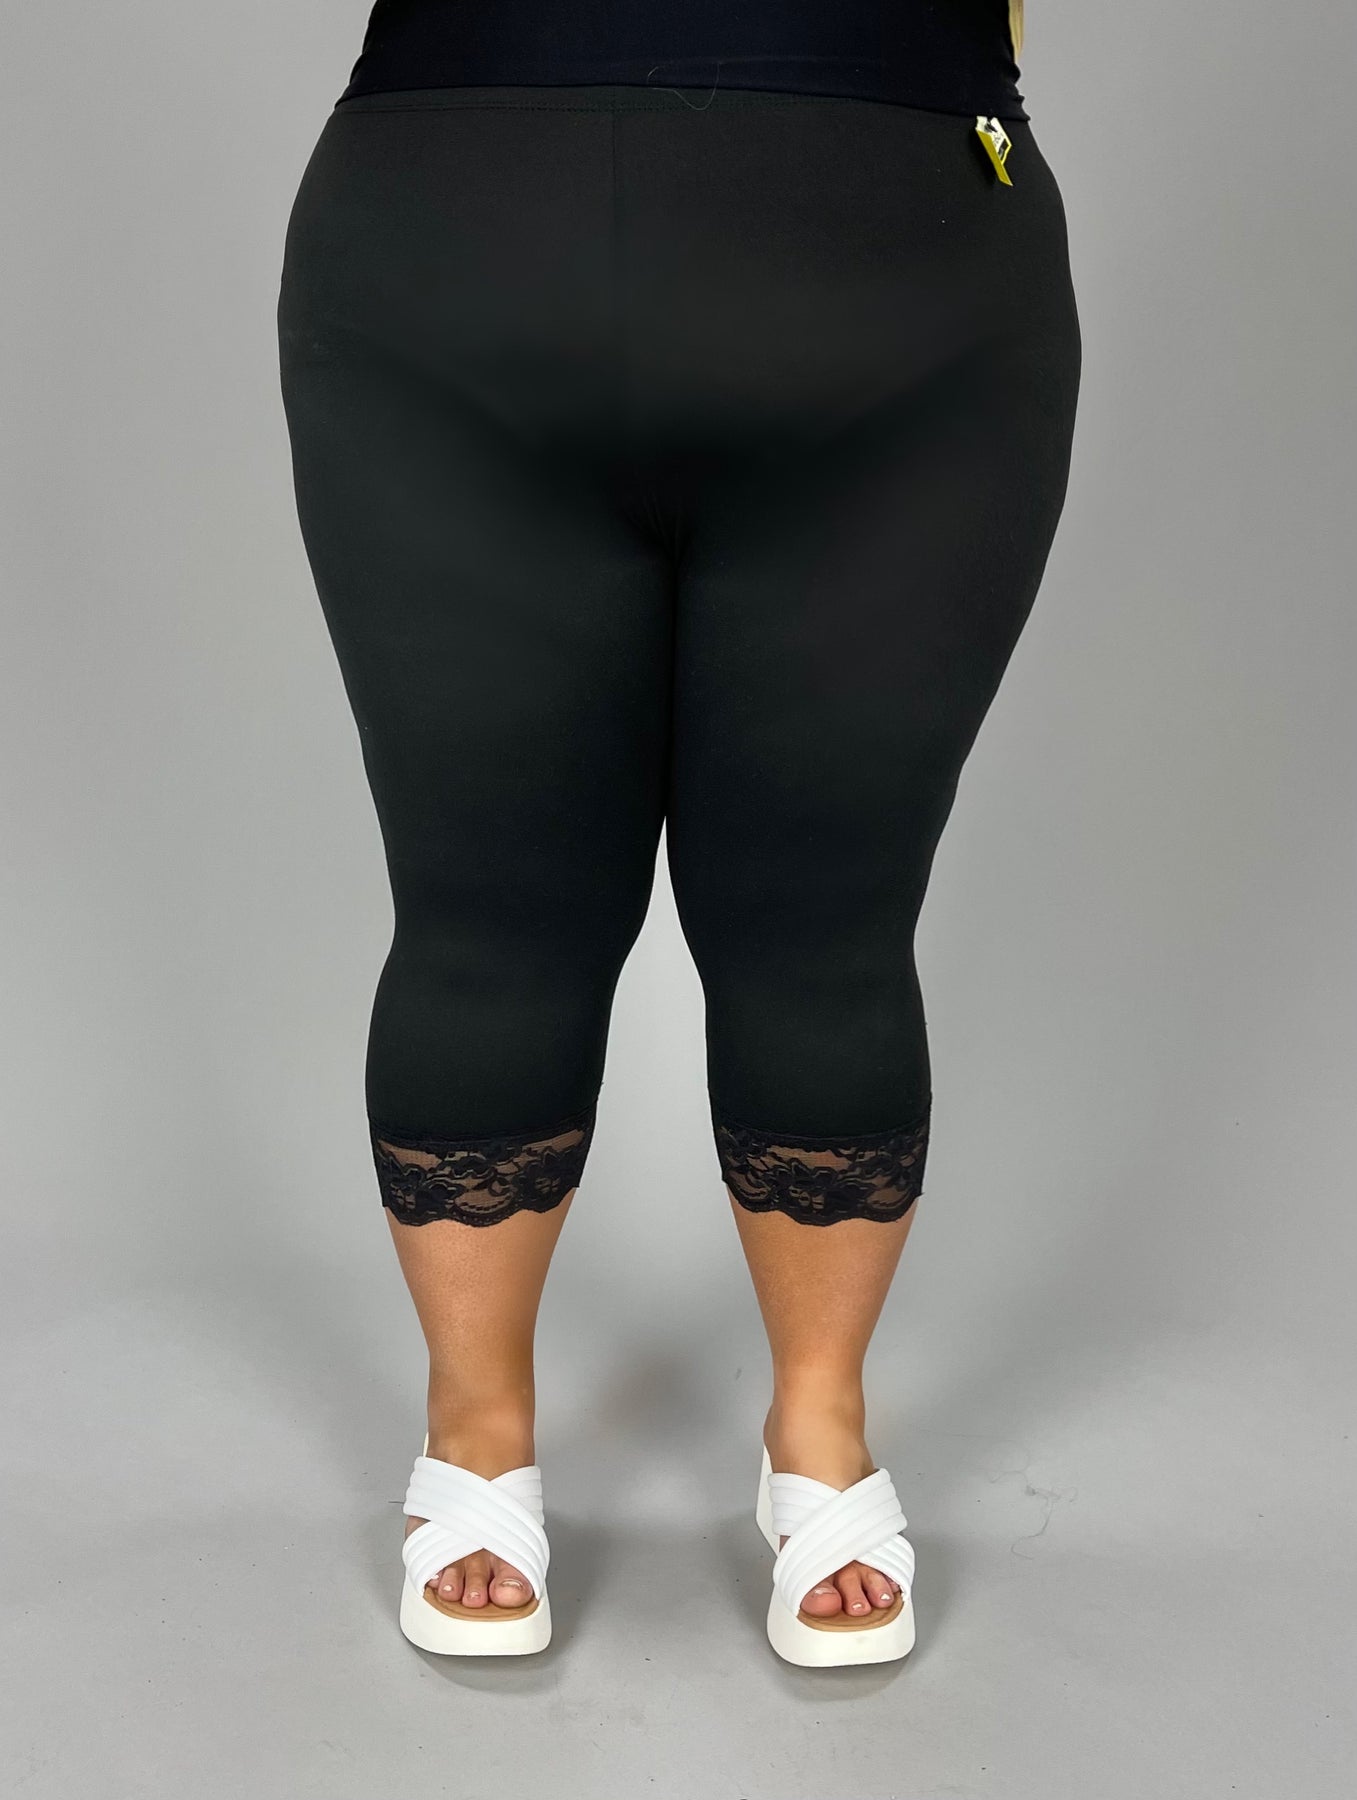 Bulk Women's Capri Tights, Black, Plus Size, Lace Trim - DollarDays